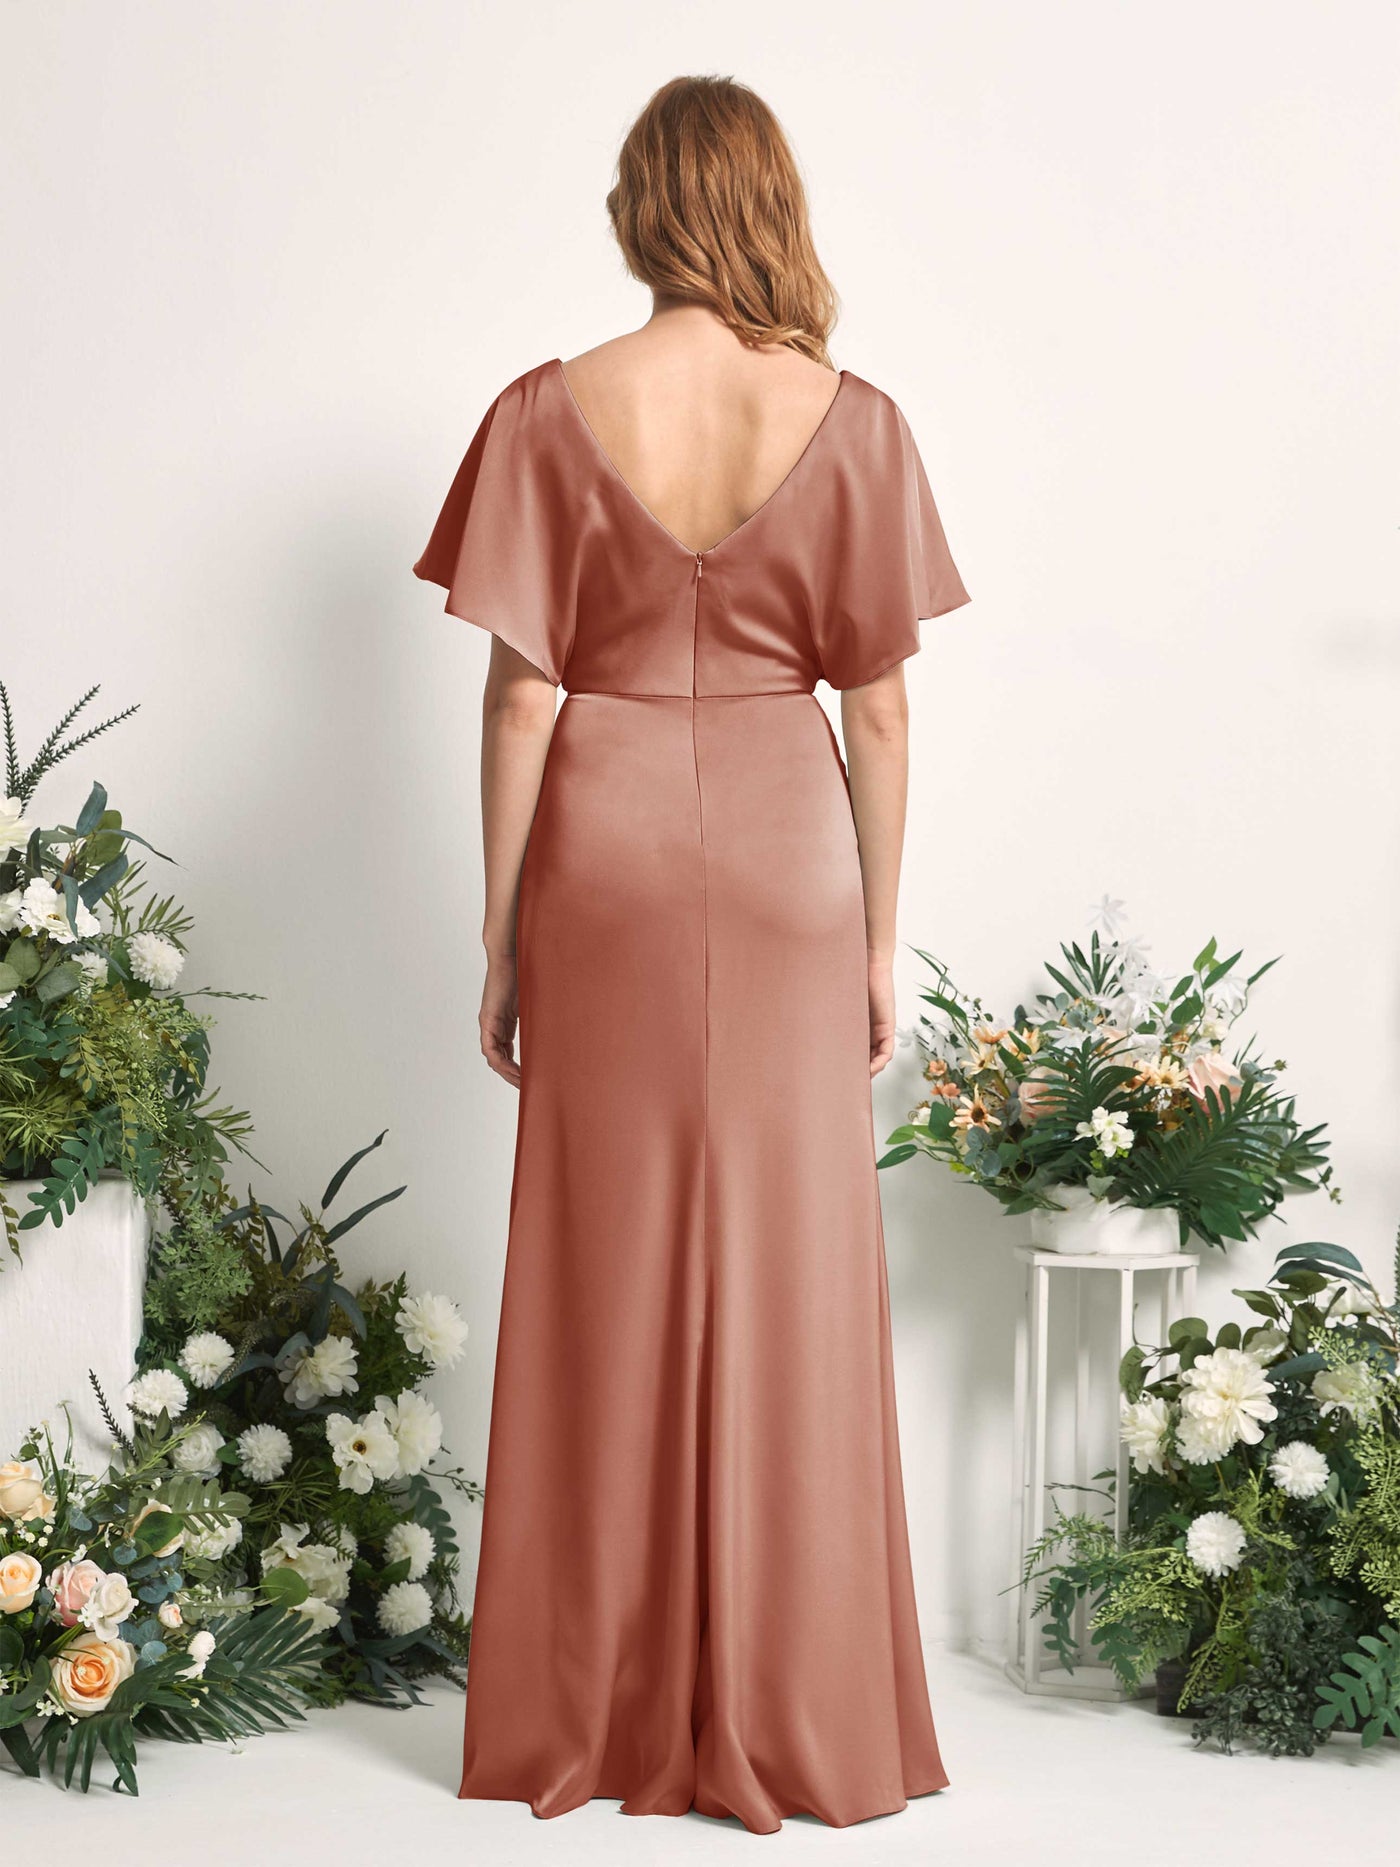 Raw Sienna Bridesmaid Dresses Bridesmaid Dress A-line Satin V-neck Full Length Short Sleeves Wedding Party Dress (80225515)#color_raw-sienna